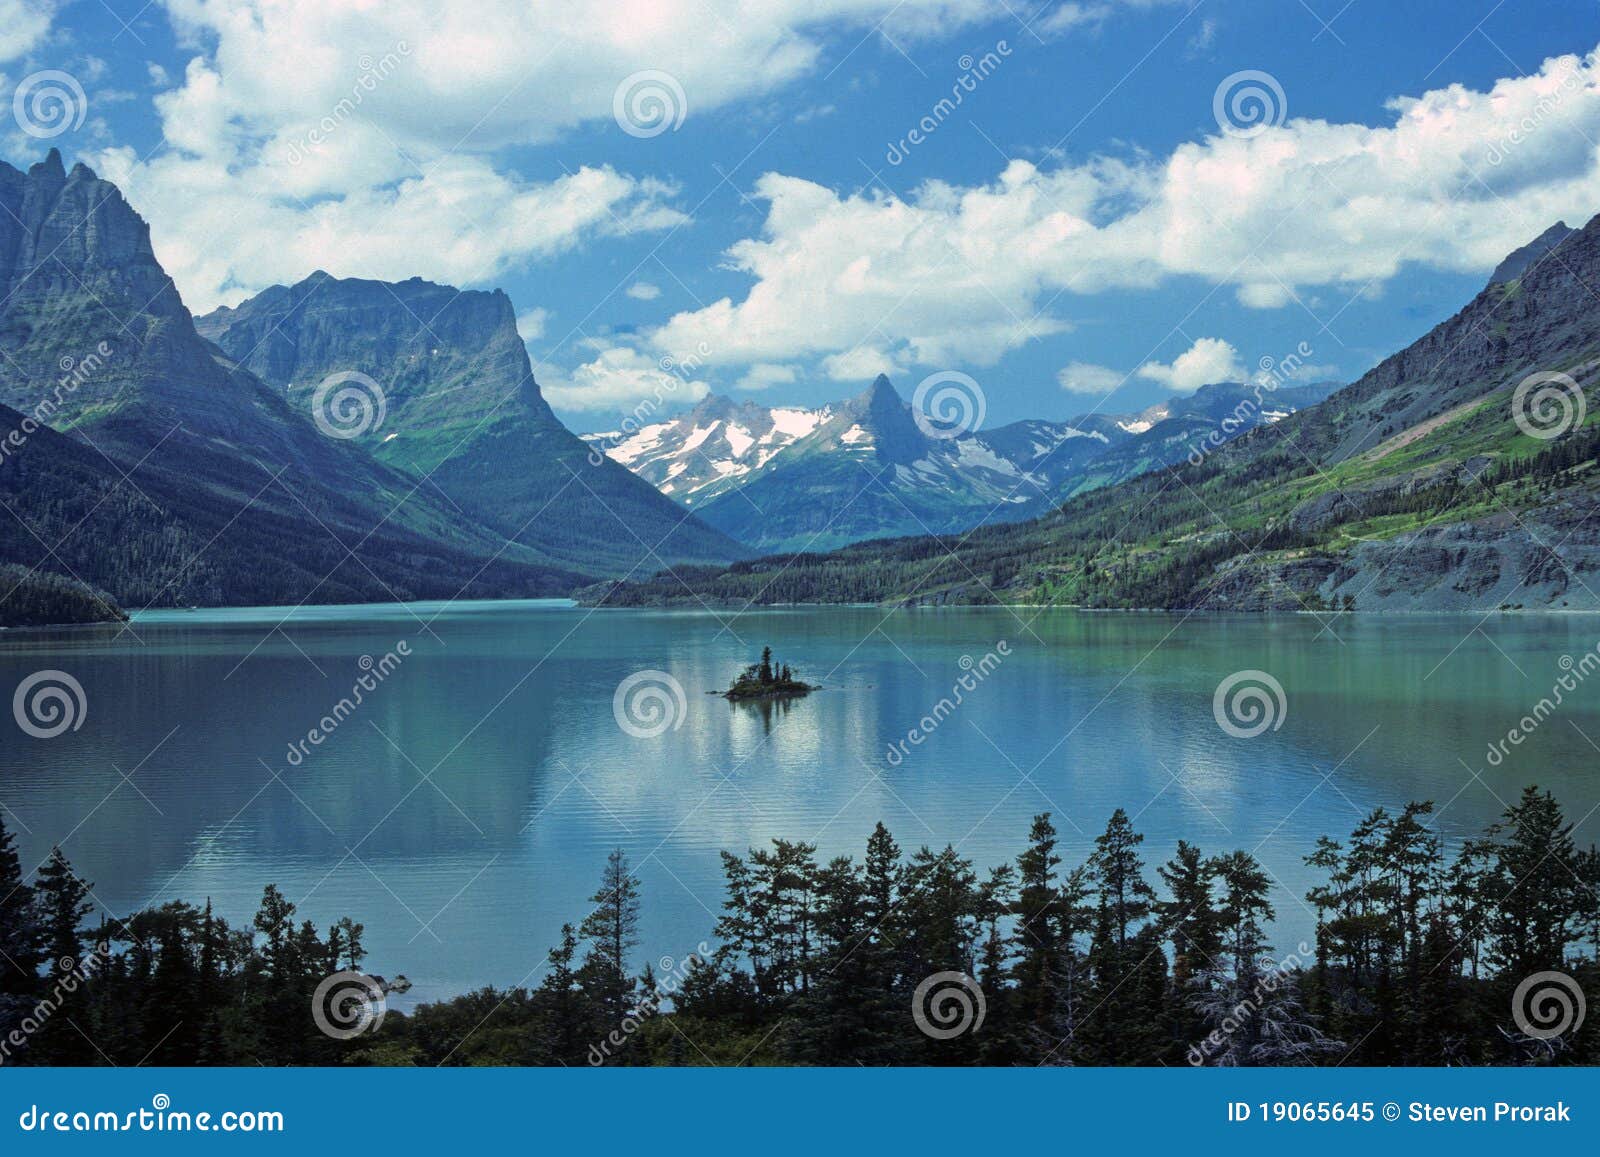 st marys lake in glacier np